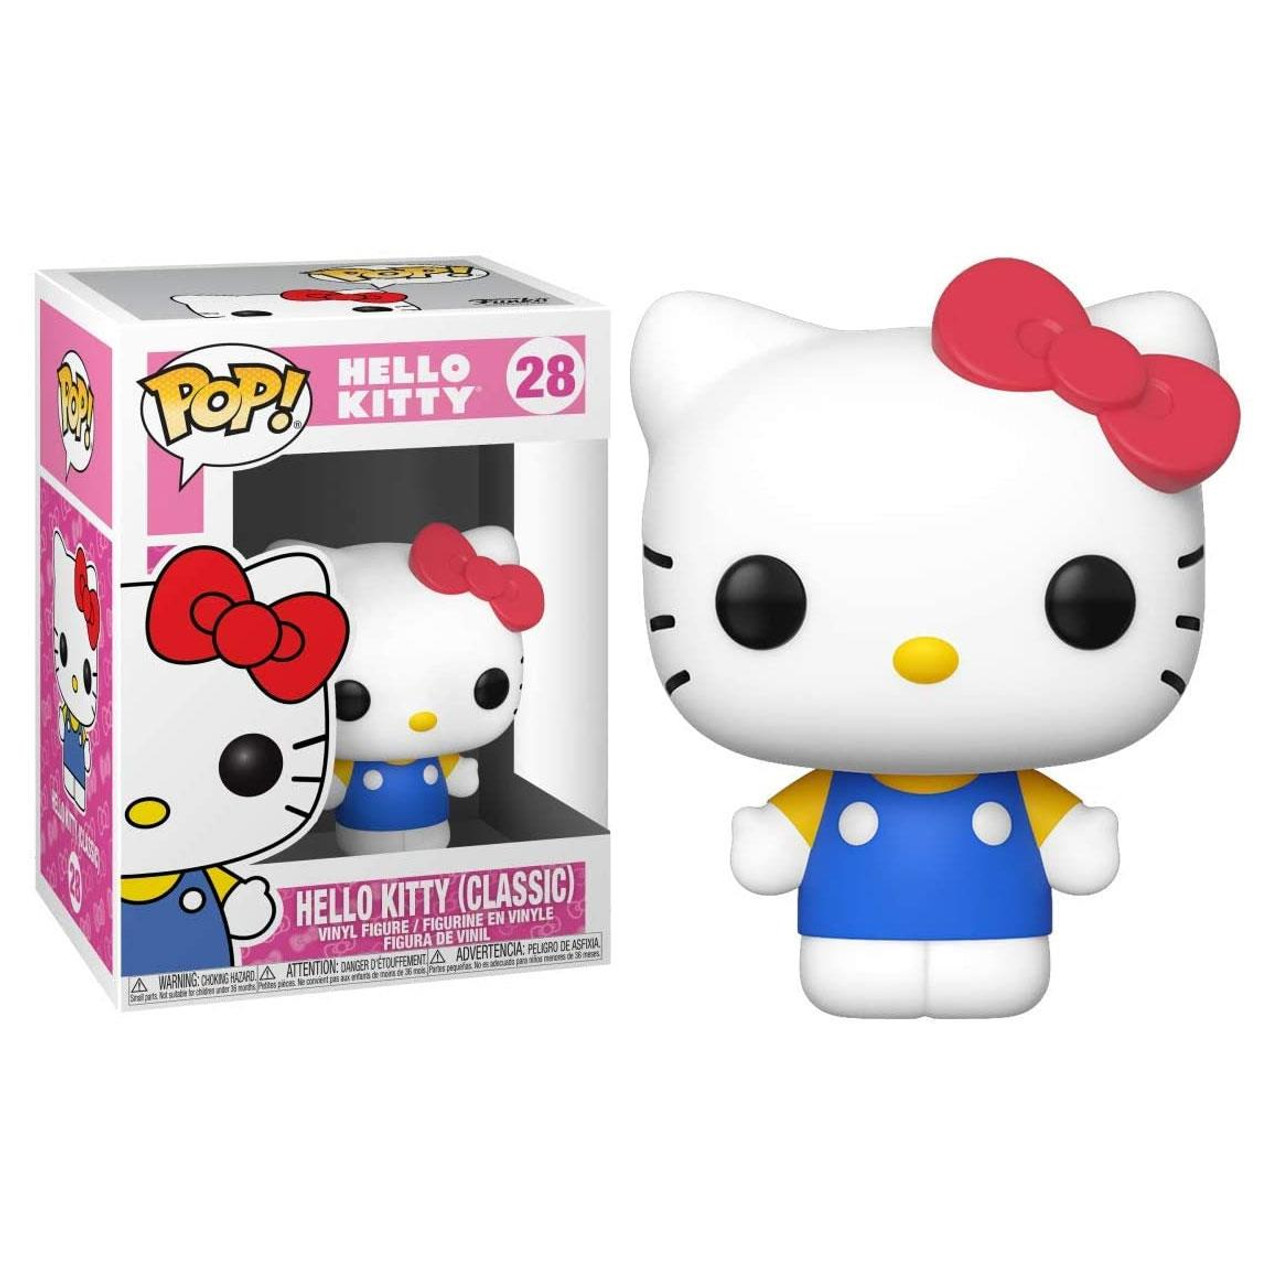 Sanrio - Hello Kitty - POP! Sanrio action figure 75